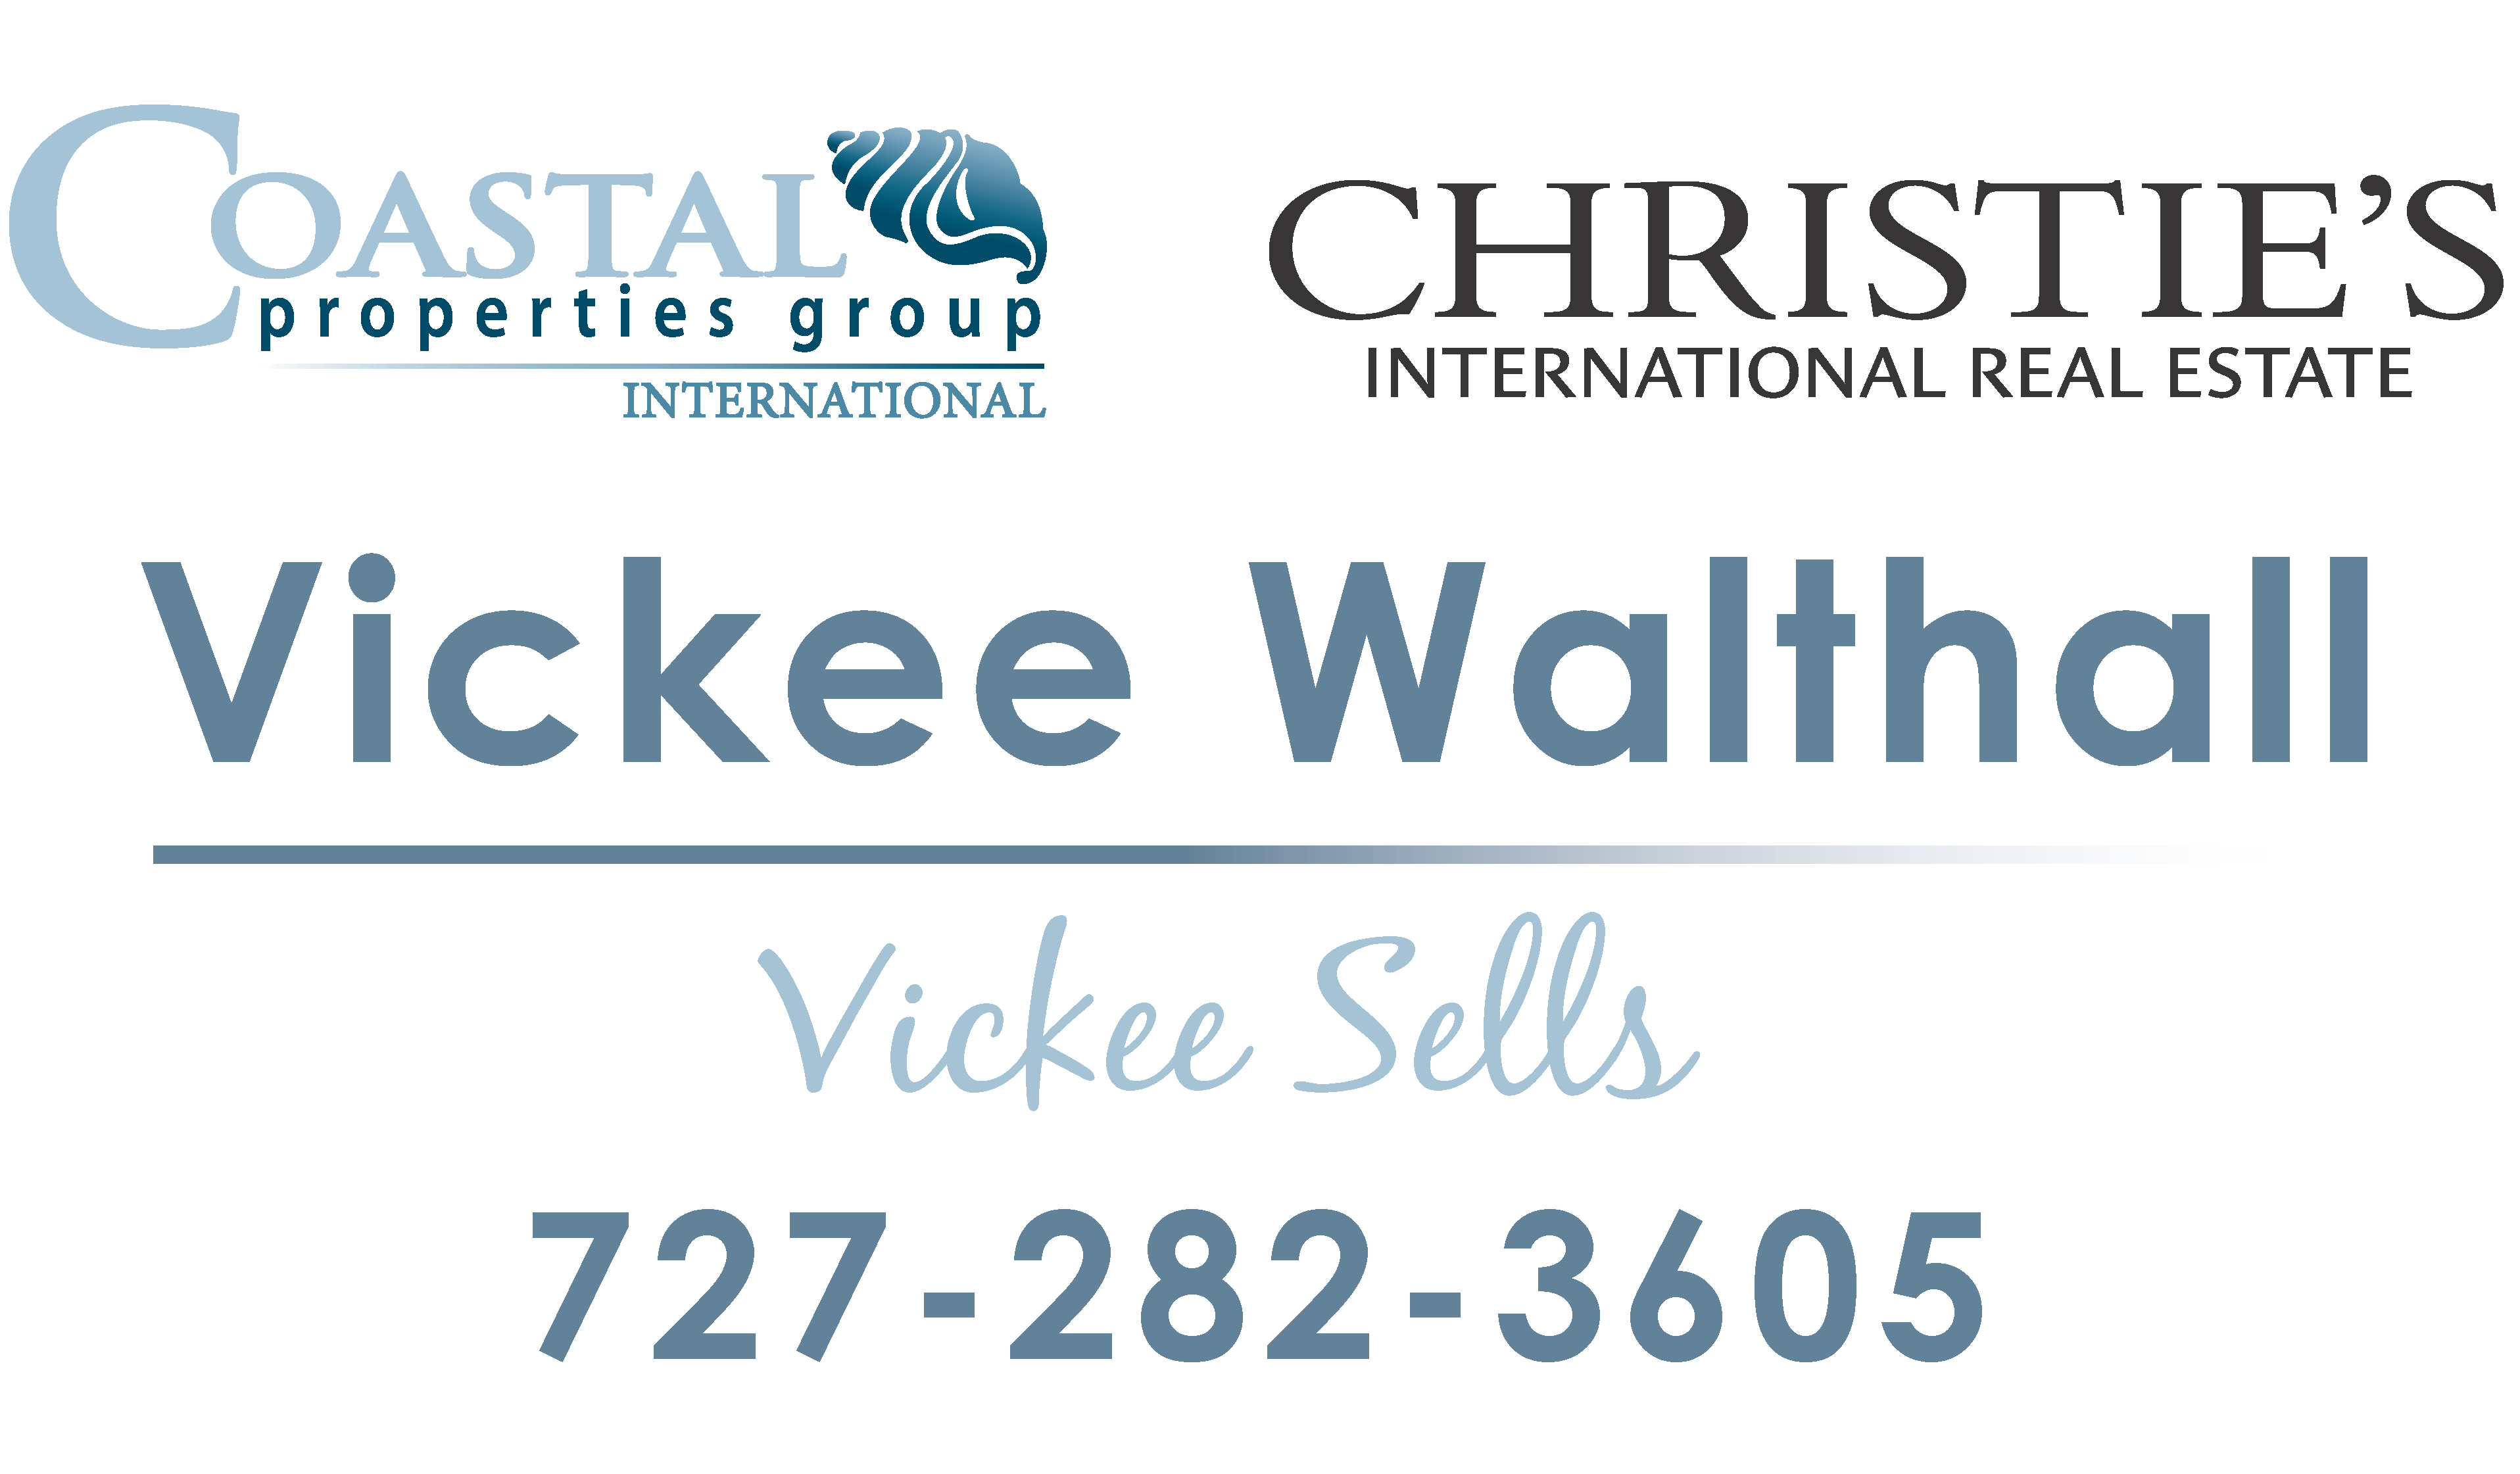 Vickee Walthall - Coastal Properties Group